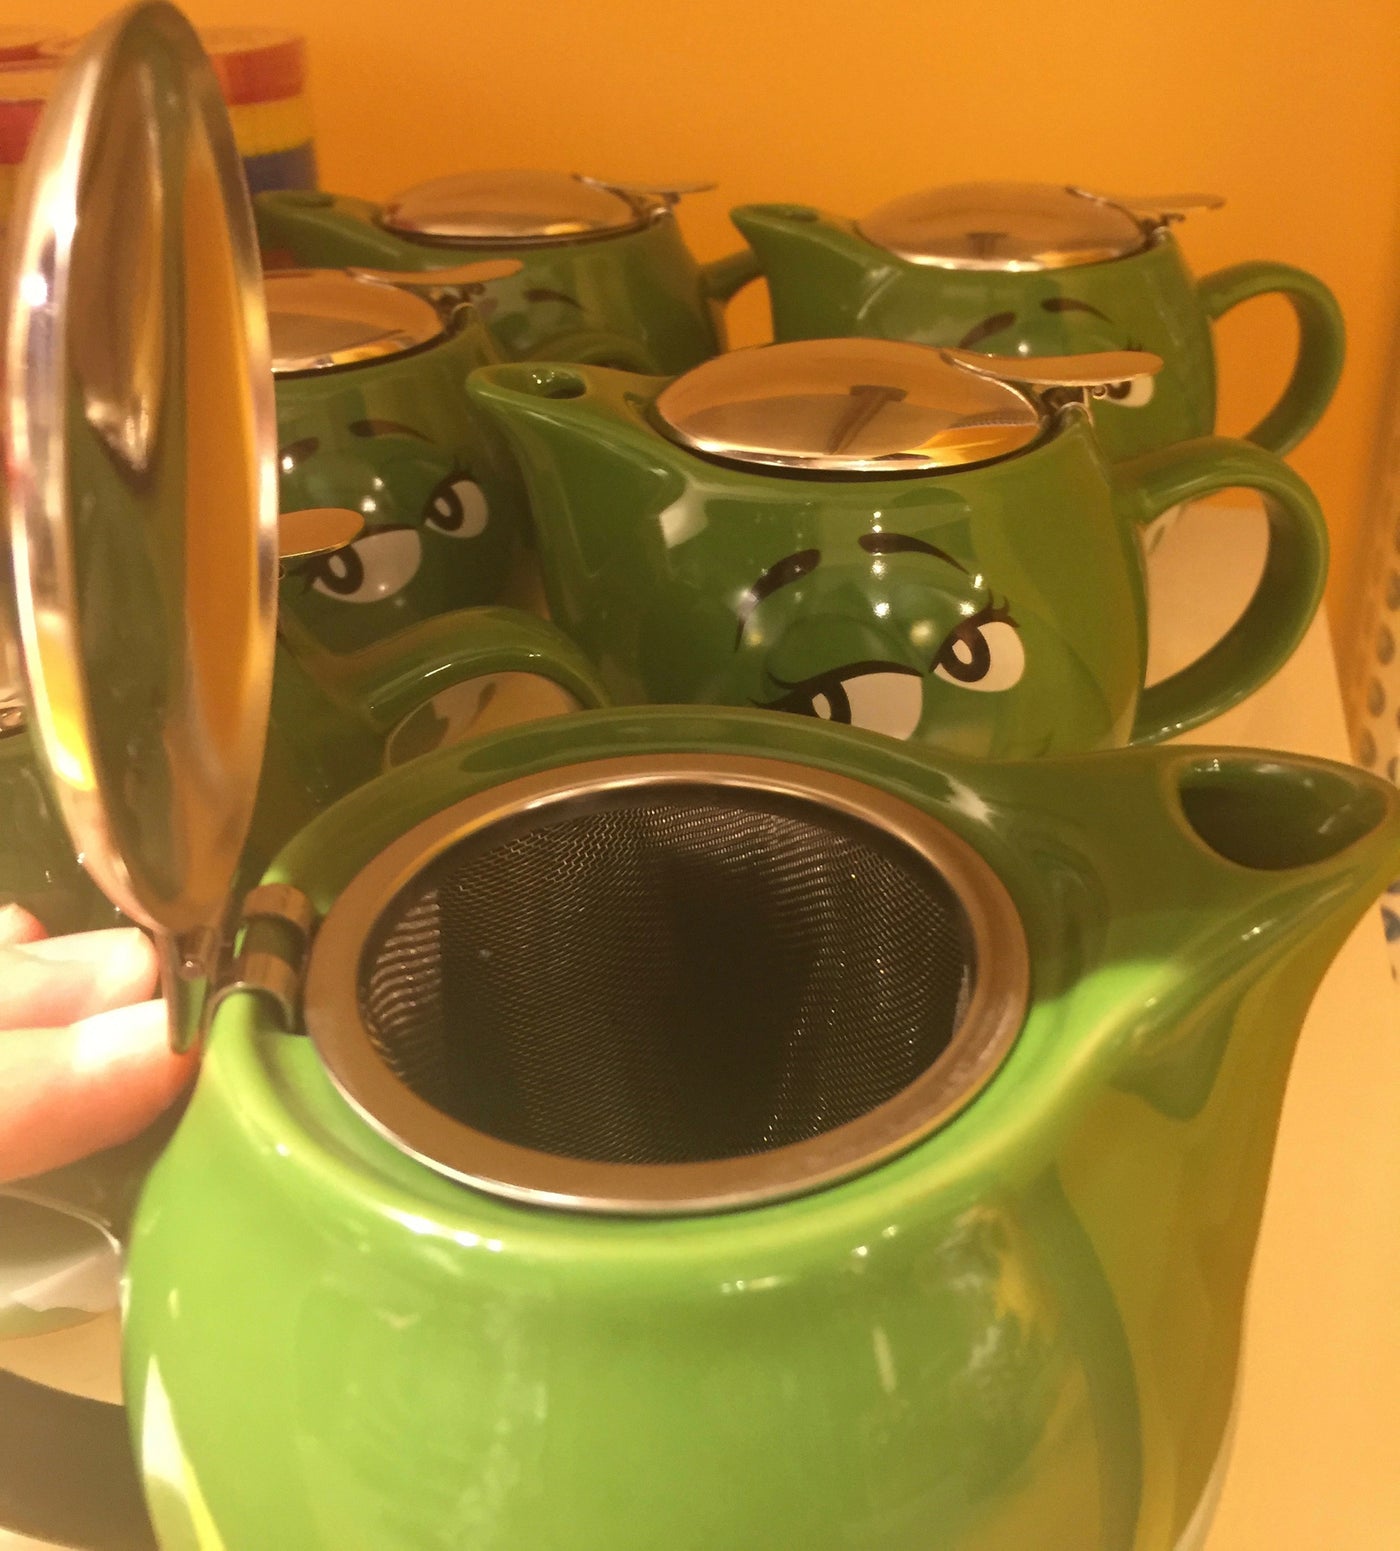 M&M's World Green Character Teapot New